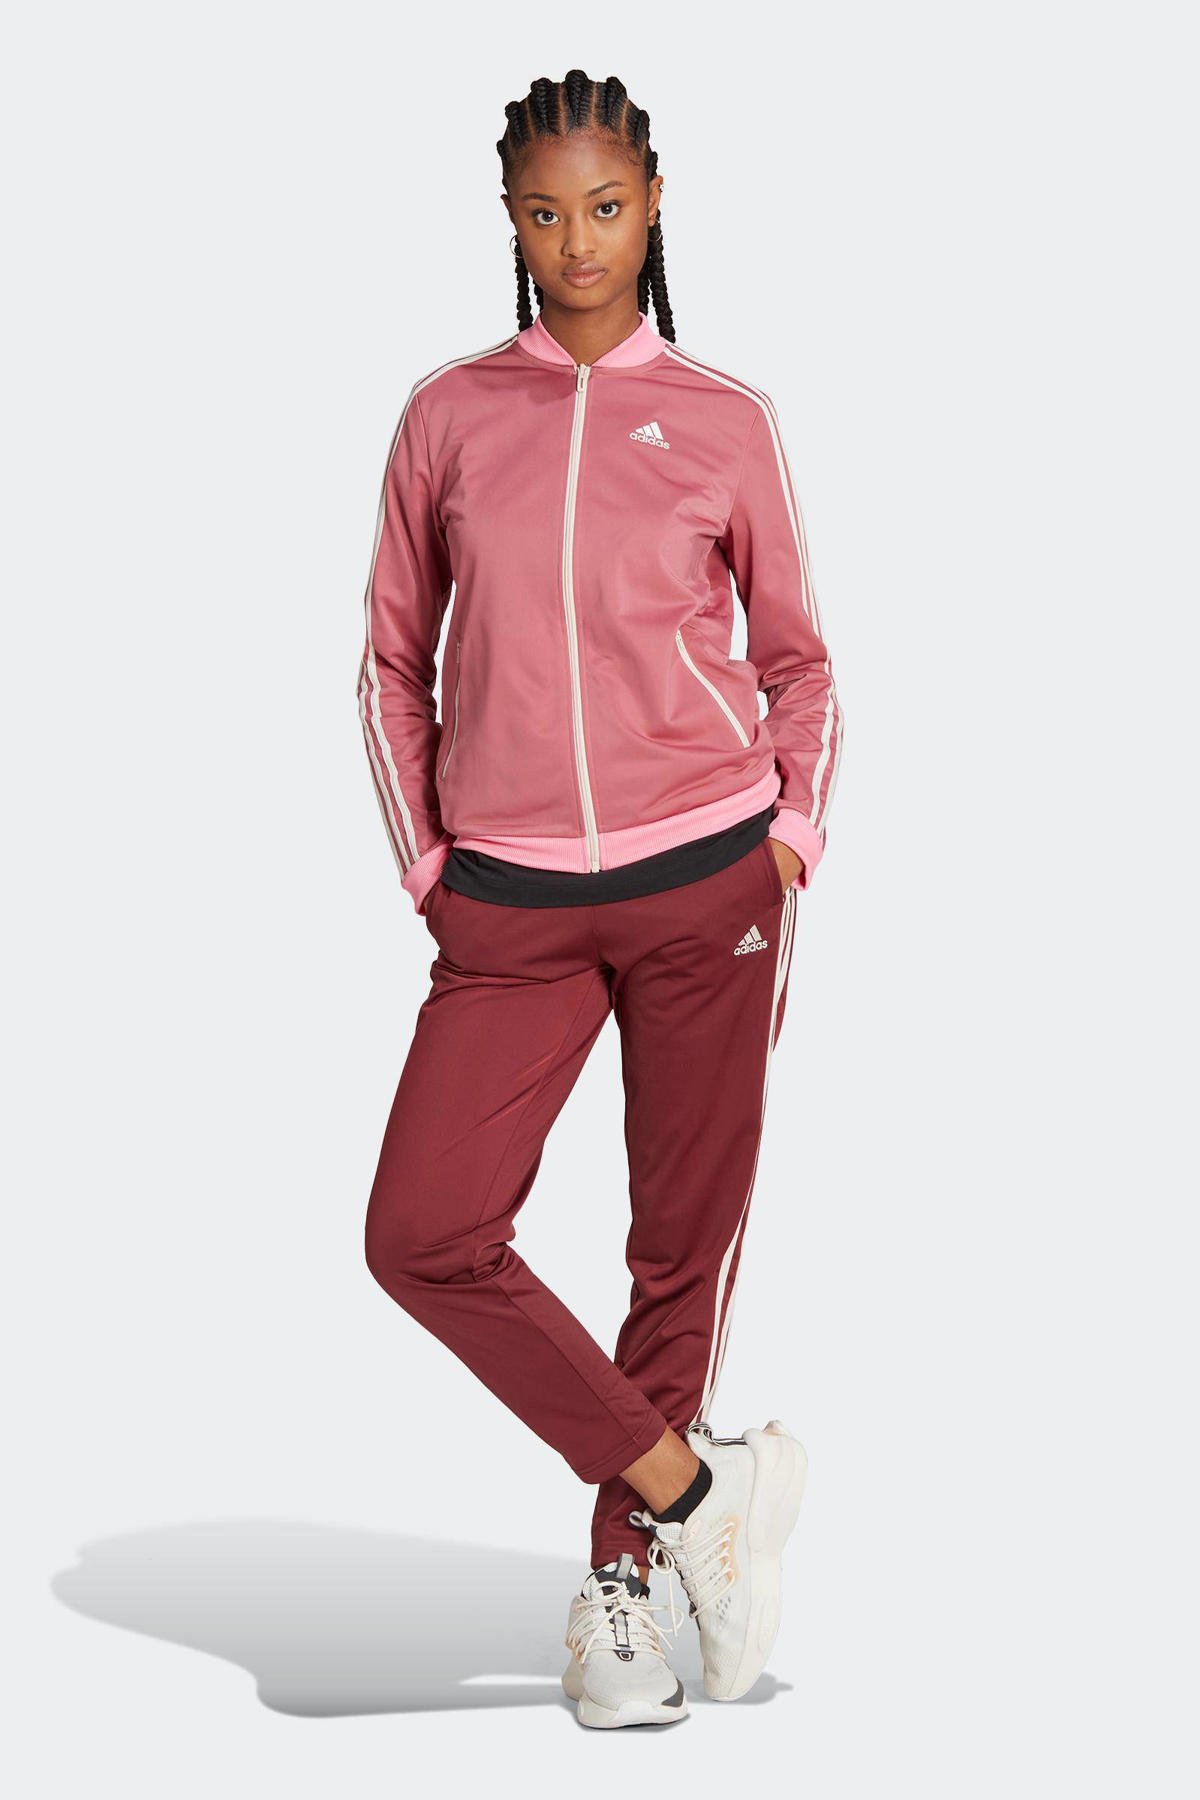 Won Kalksteen Heer adidas Sportswear trainingspak roze/donkerrood | wehkamp